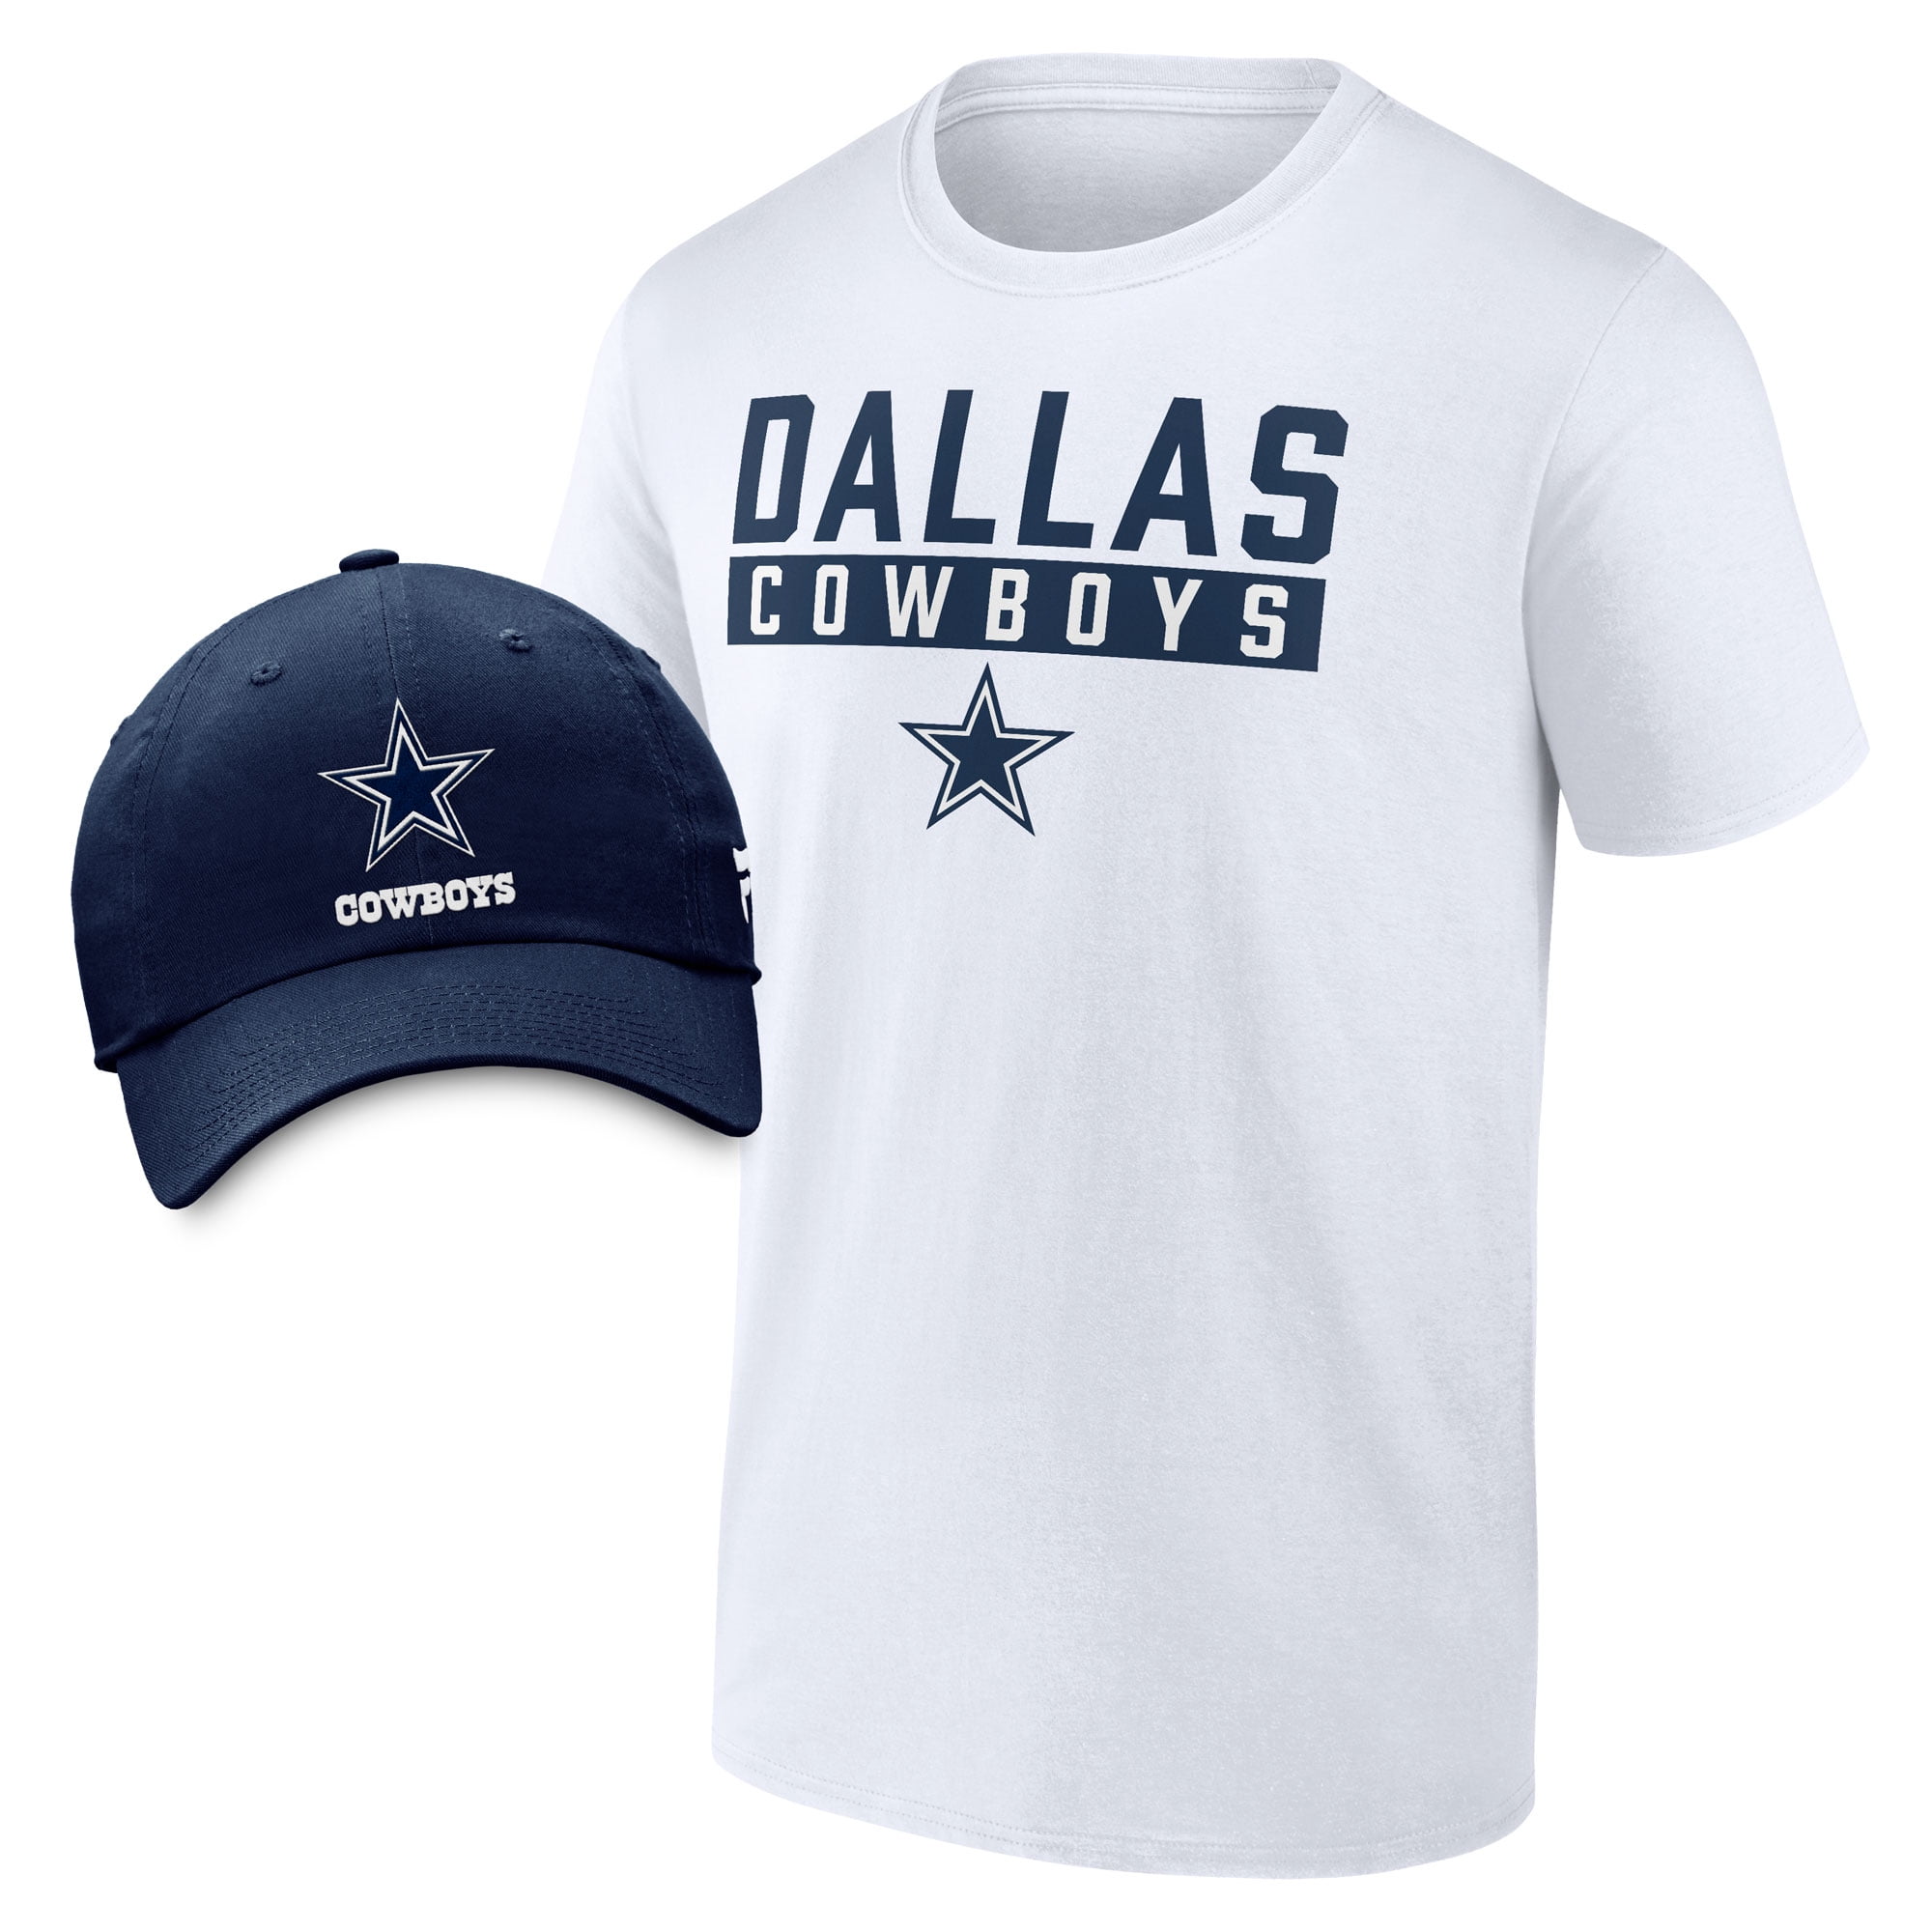 Men's Fanatics Branded White/Navy Dallas Cowboys T-Shirt & Adjustable ...